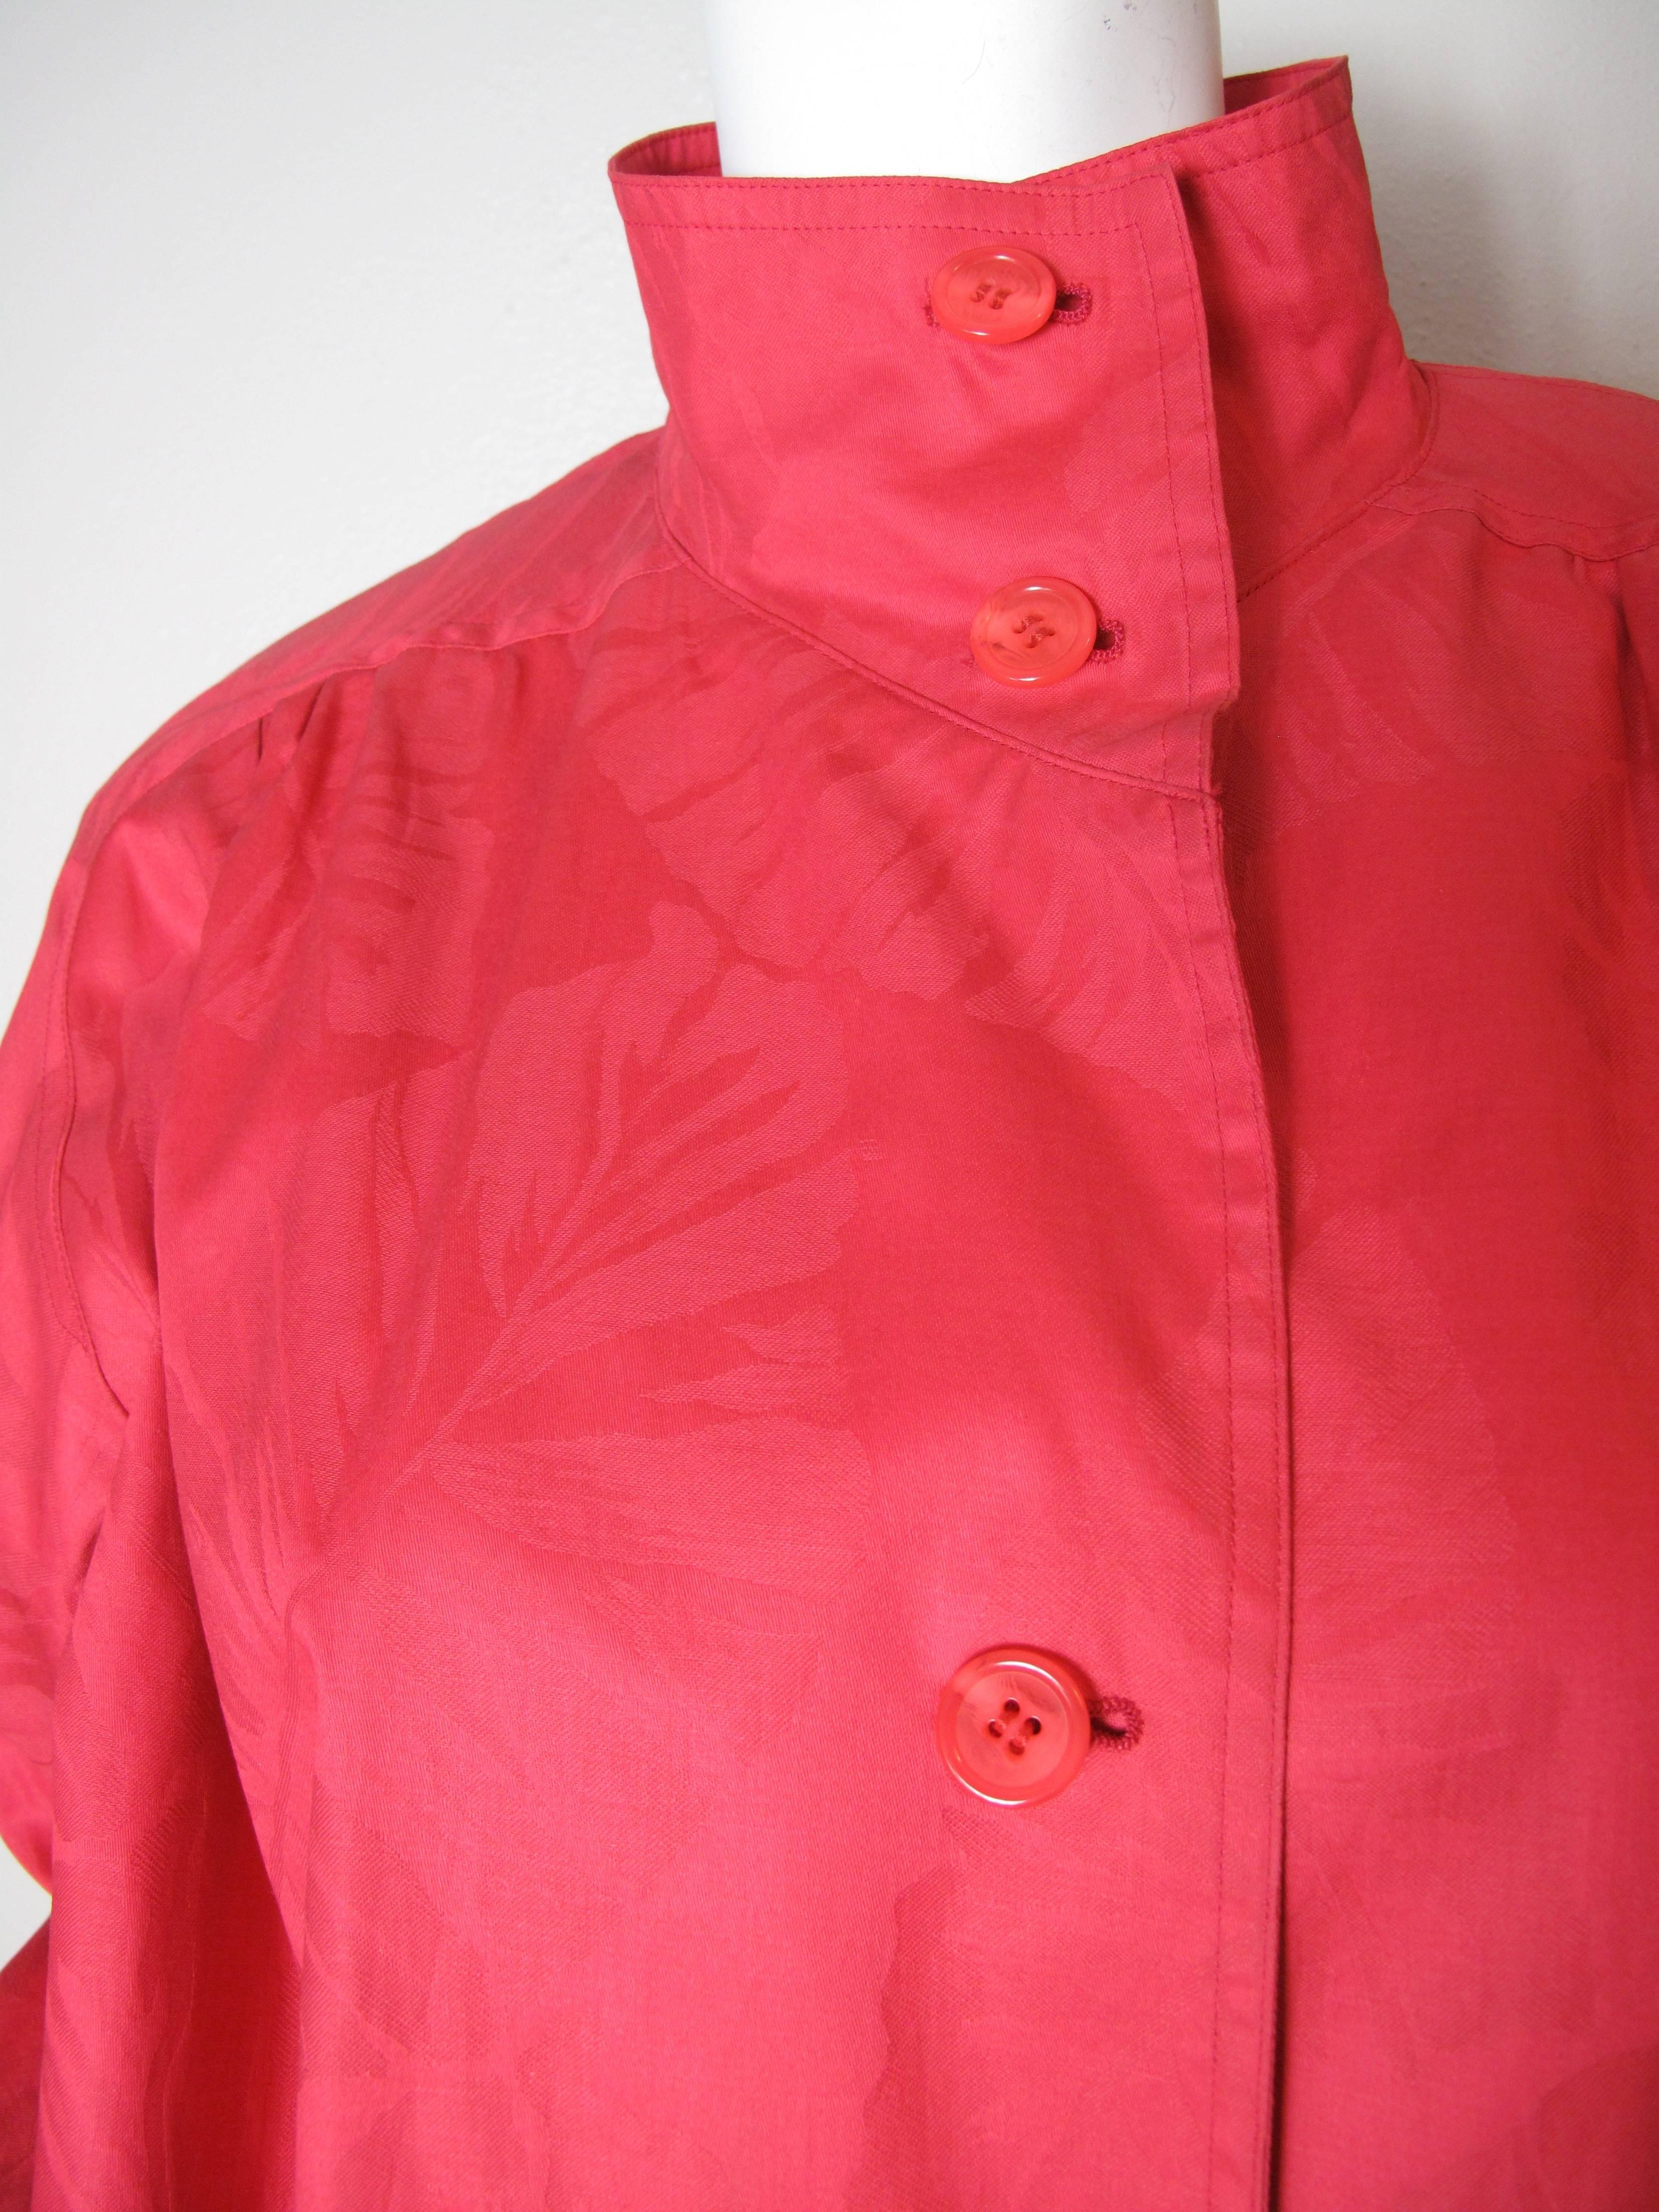 Women's Bill Blass Red Coat